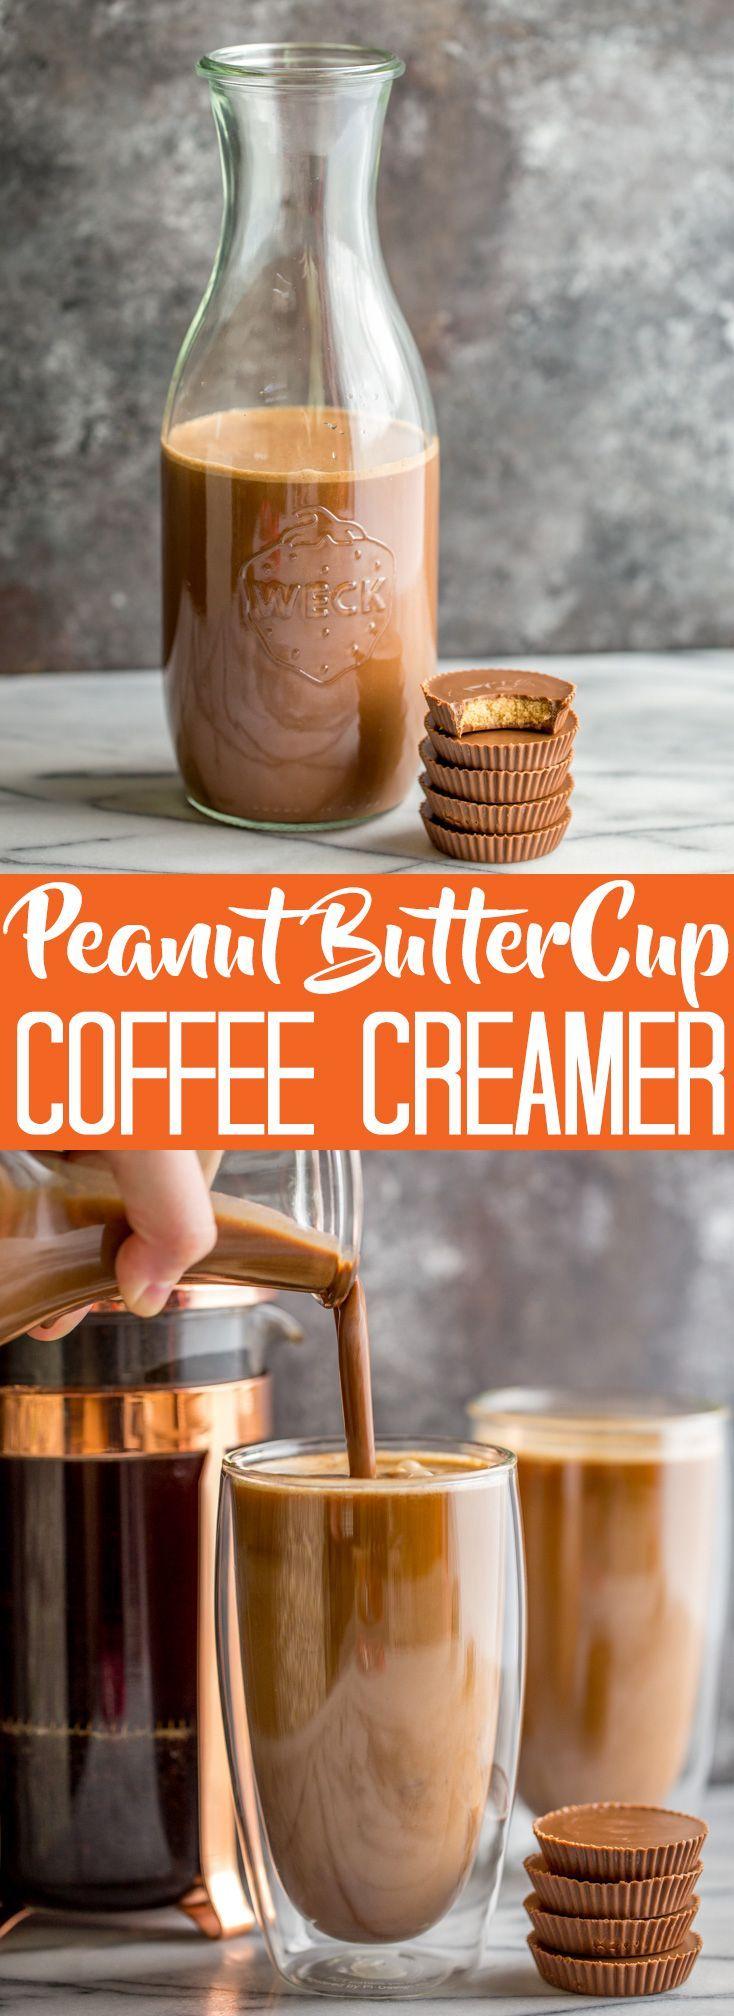 Wedding - Homemade Peanut Butter Cup Coffee Creamer